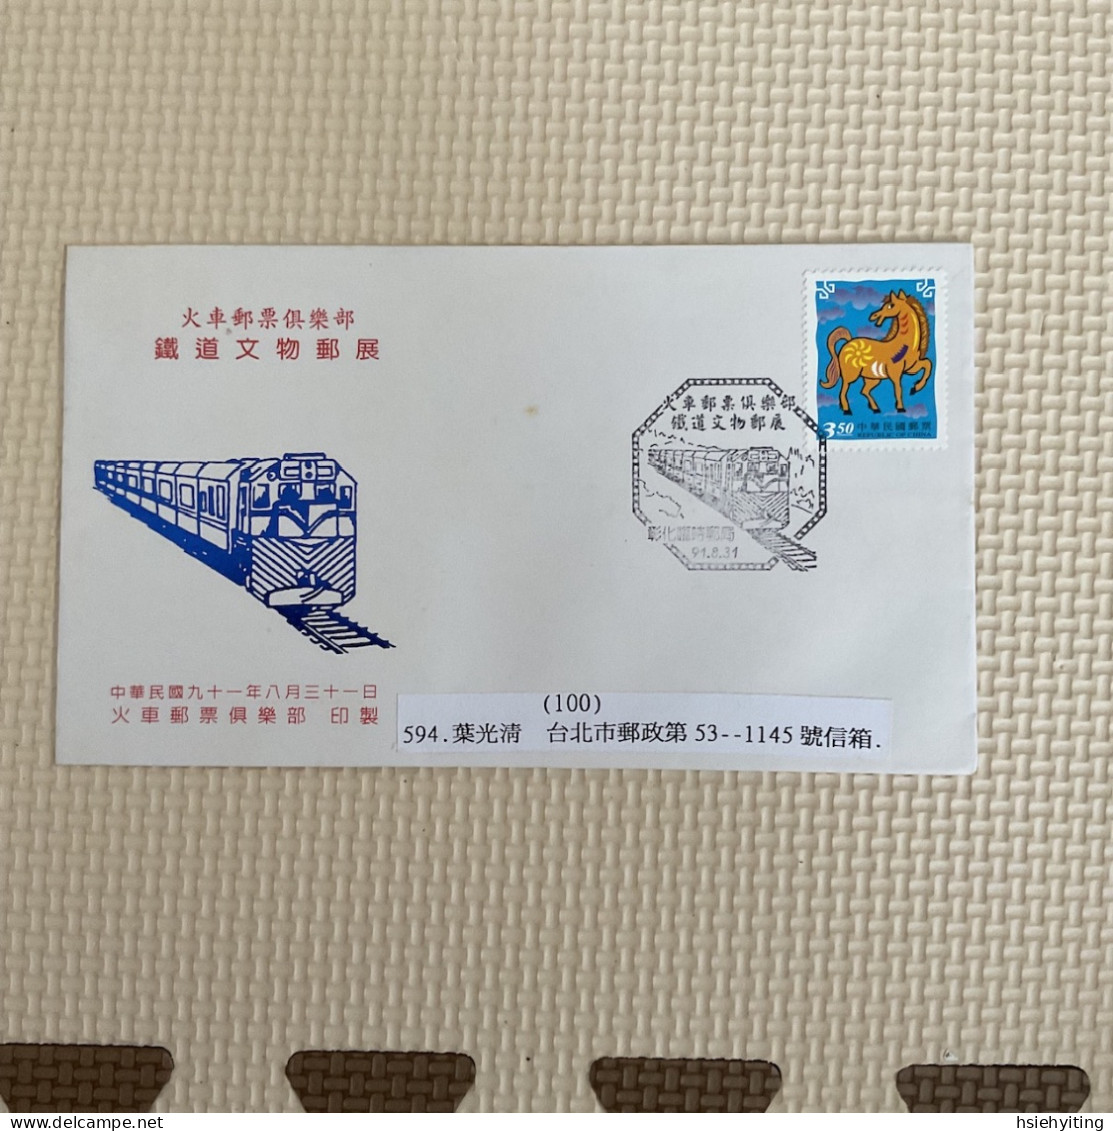 Taiwanese Train Postmarks - Treinen